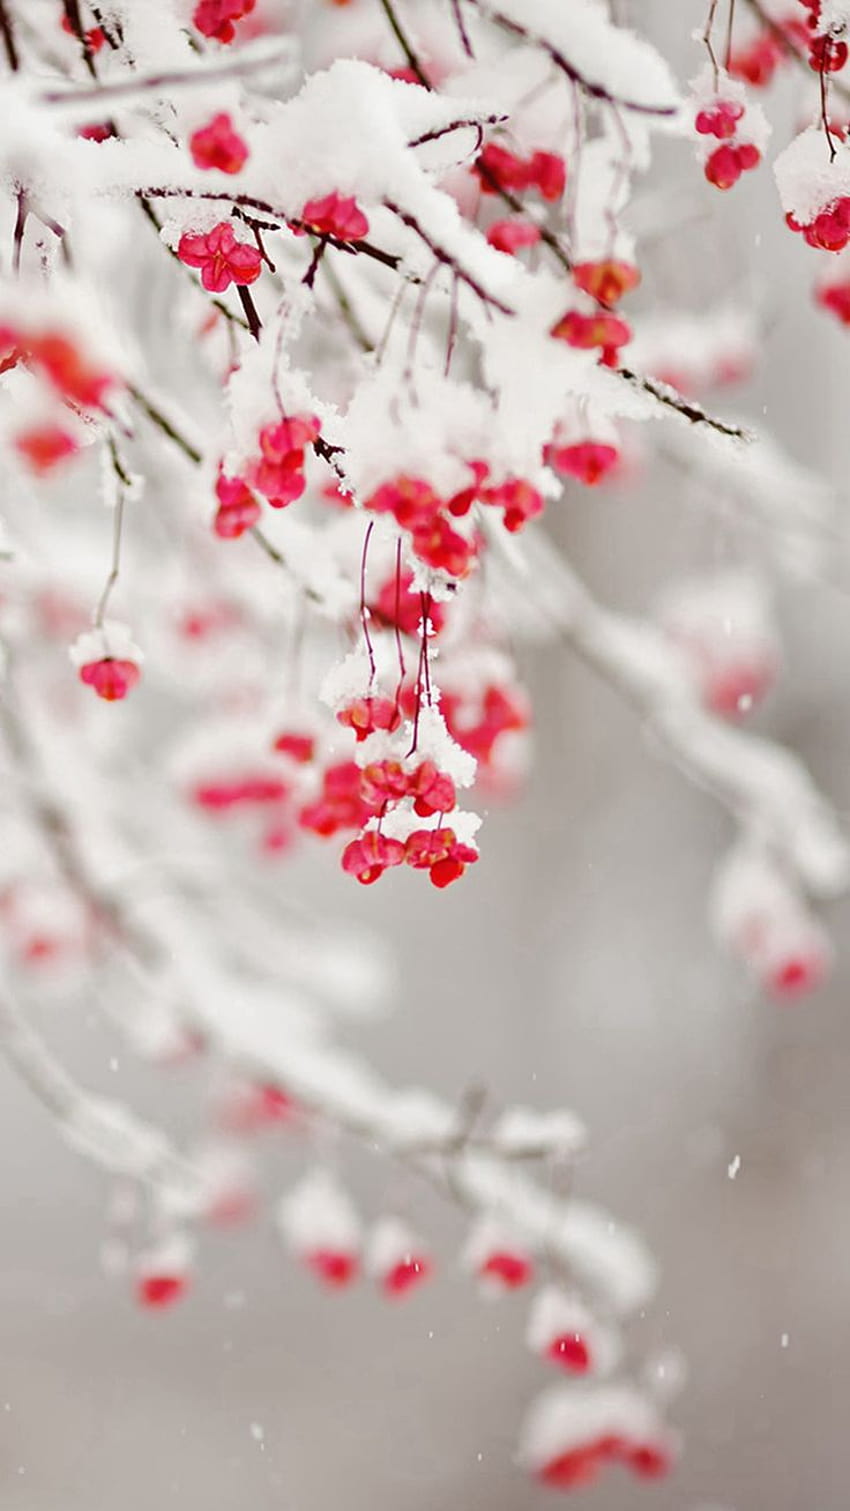 Winter Snowy Pure Icy Fruit Branch iPhone 6, iphone musim dingin yang lucu wallpaper ponsel HD